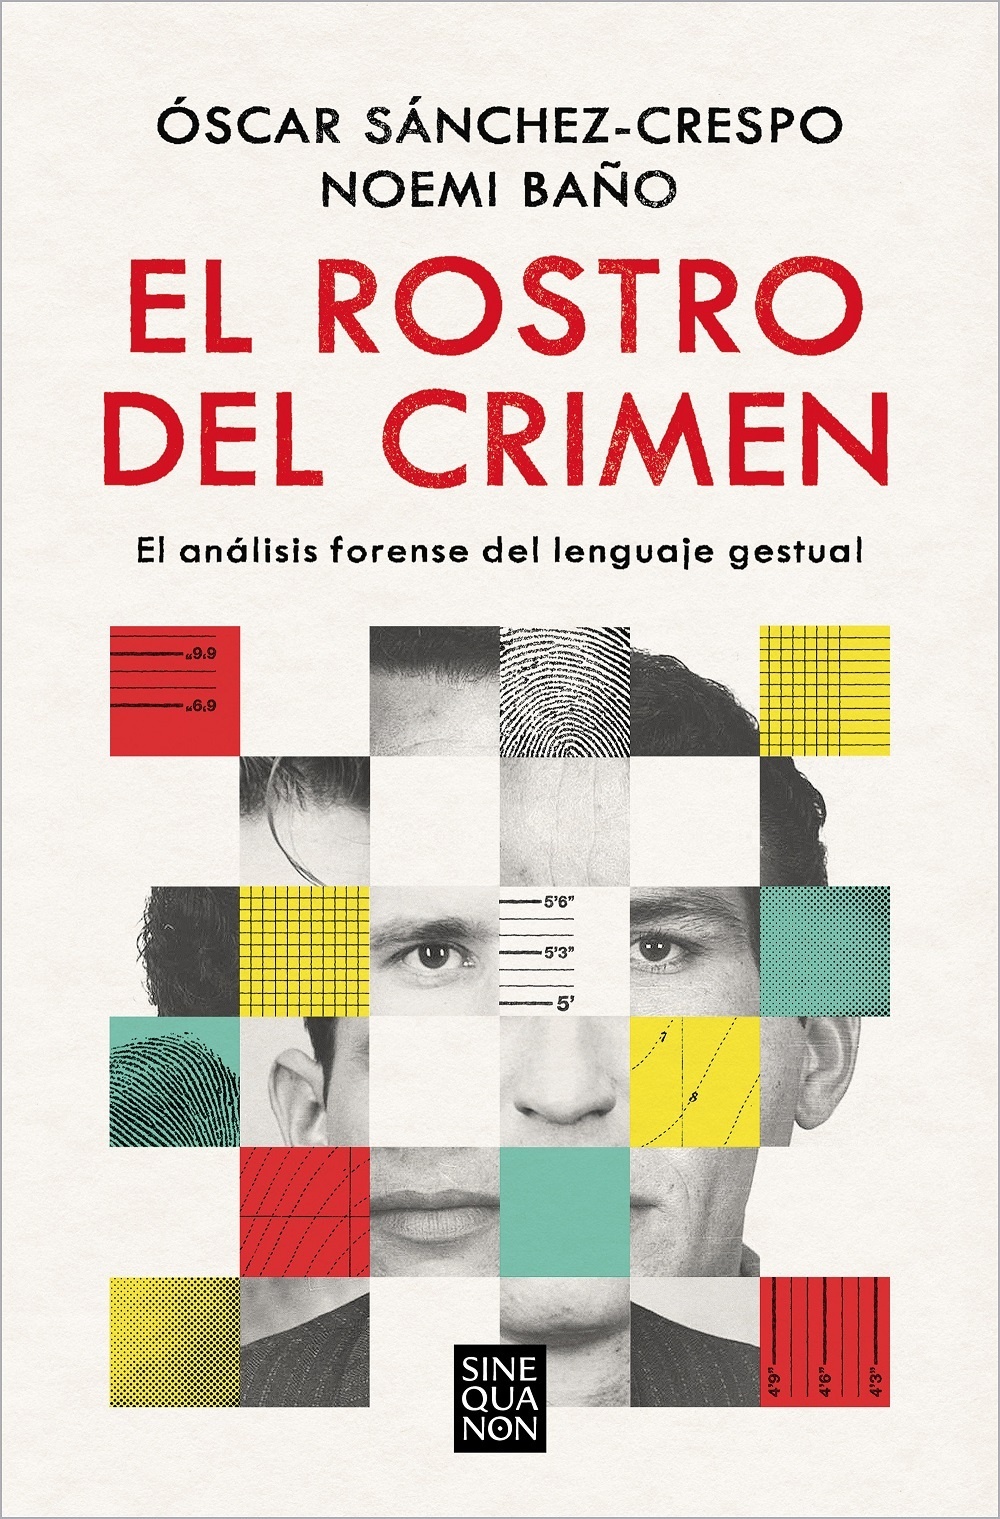 Rostro del crimen, El "El análisis forense del lenguaje gestual"